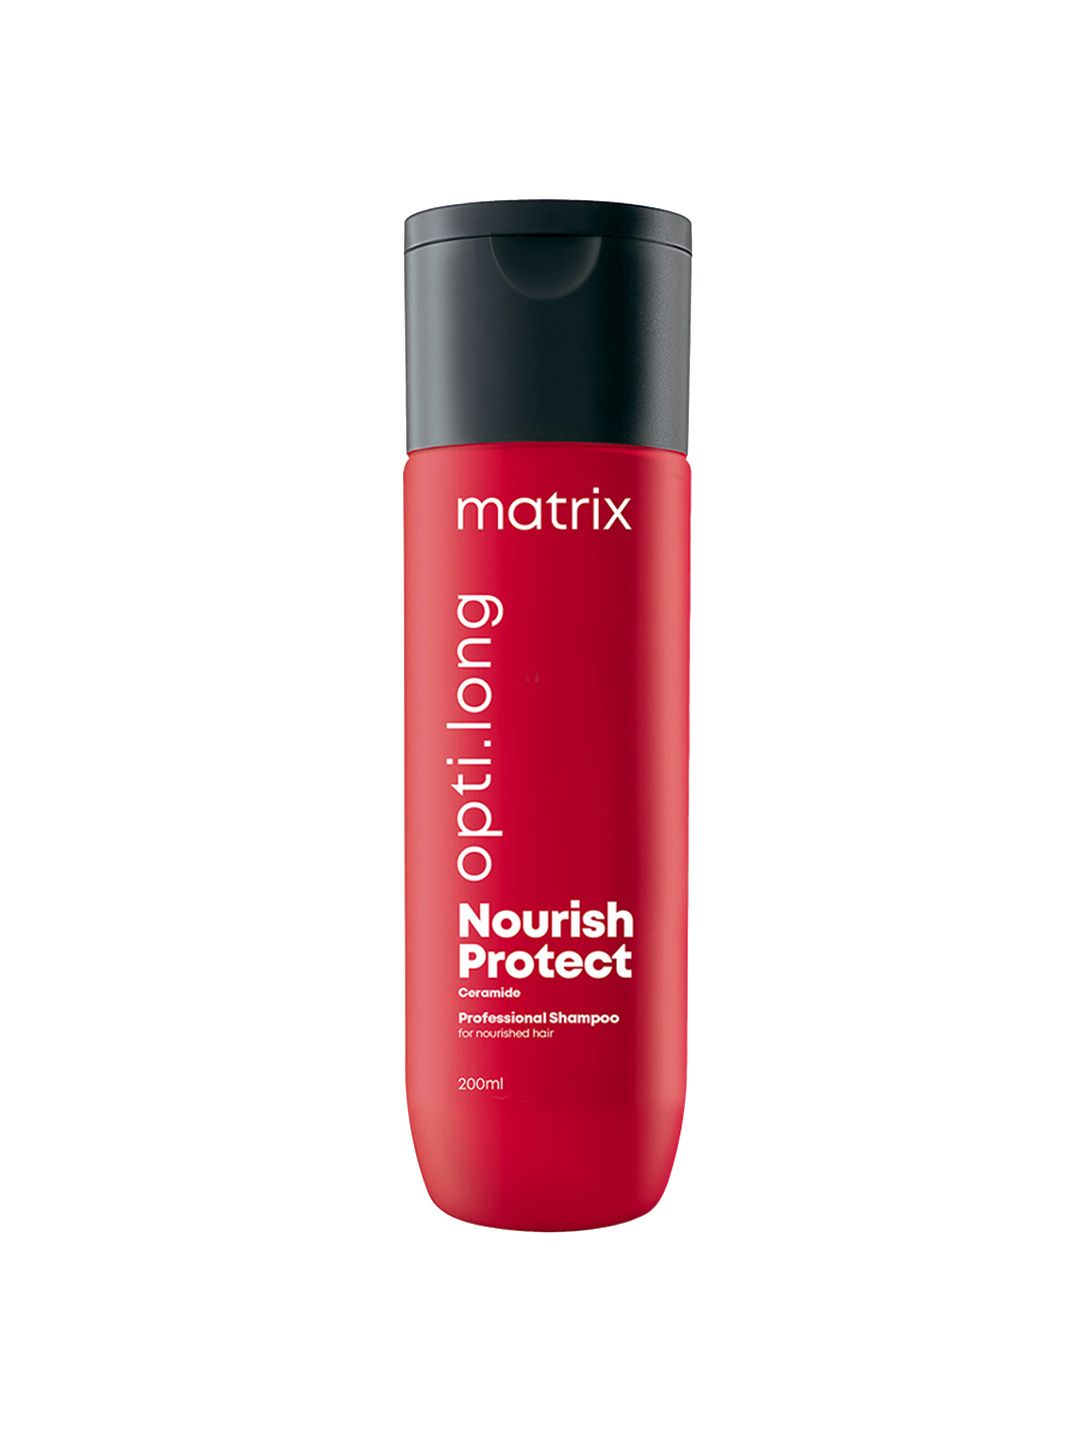 MATRIX Opti Long Nourish Protect Professional Nourishing Shampoo with Ceramide - 200ml Price in India